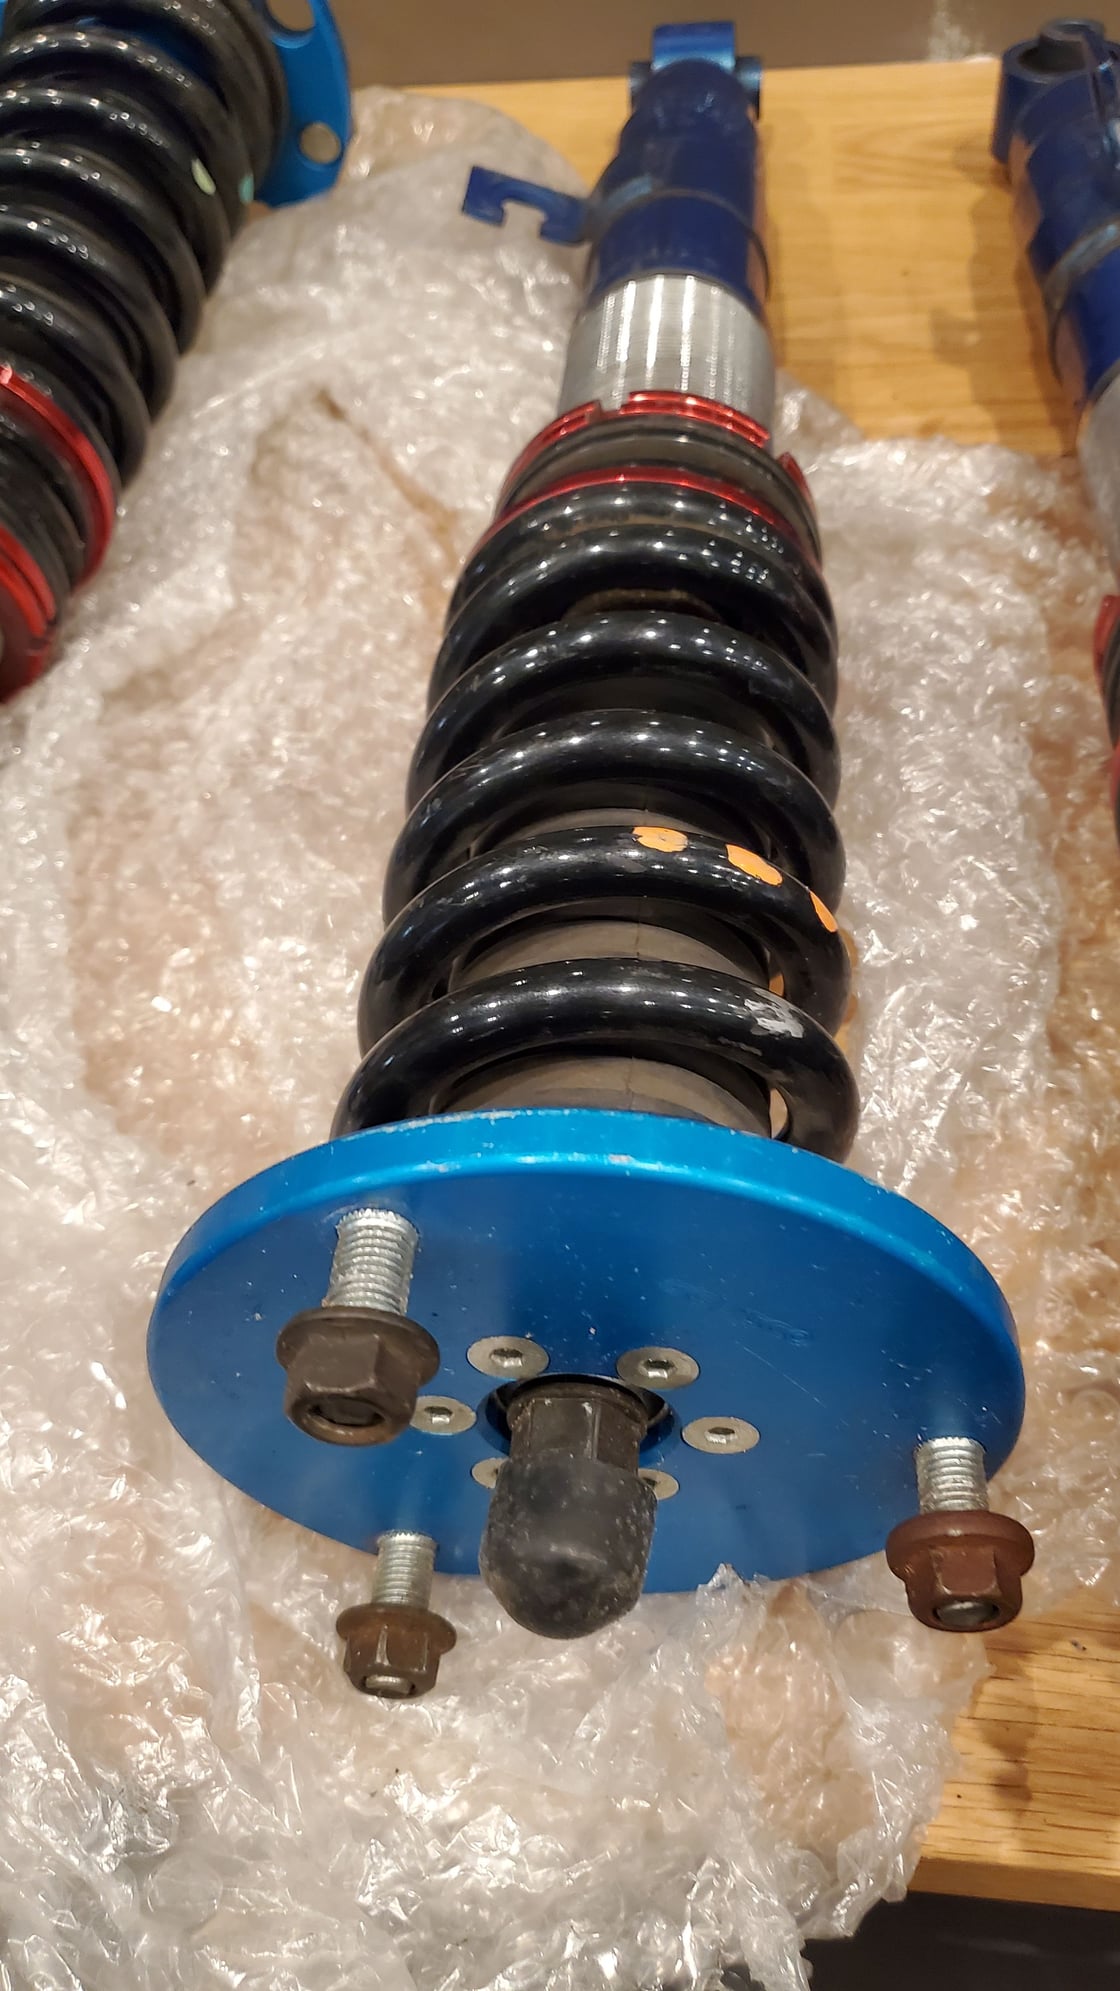 Steering/Suspension - Cusco coilovers - Used - 1992 to 2002 Mazda RX-7 - Acworth, GA 30102, United States